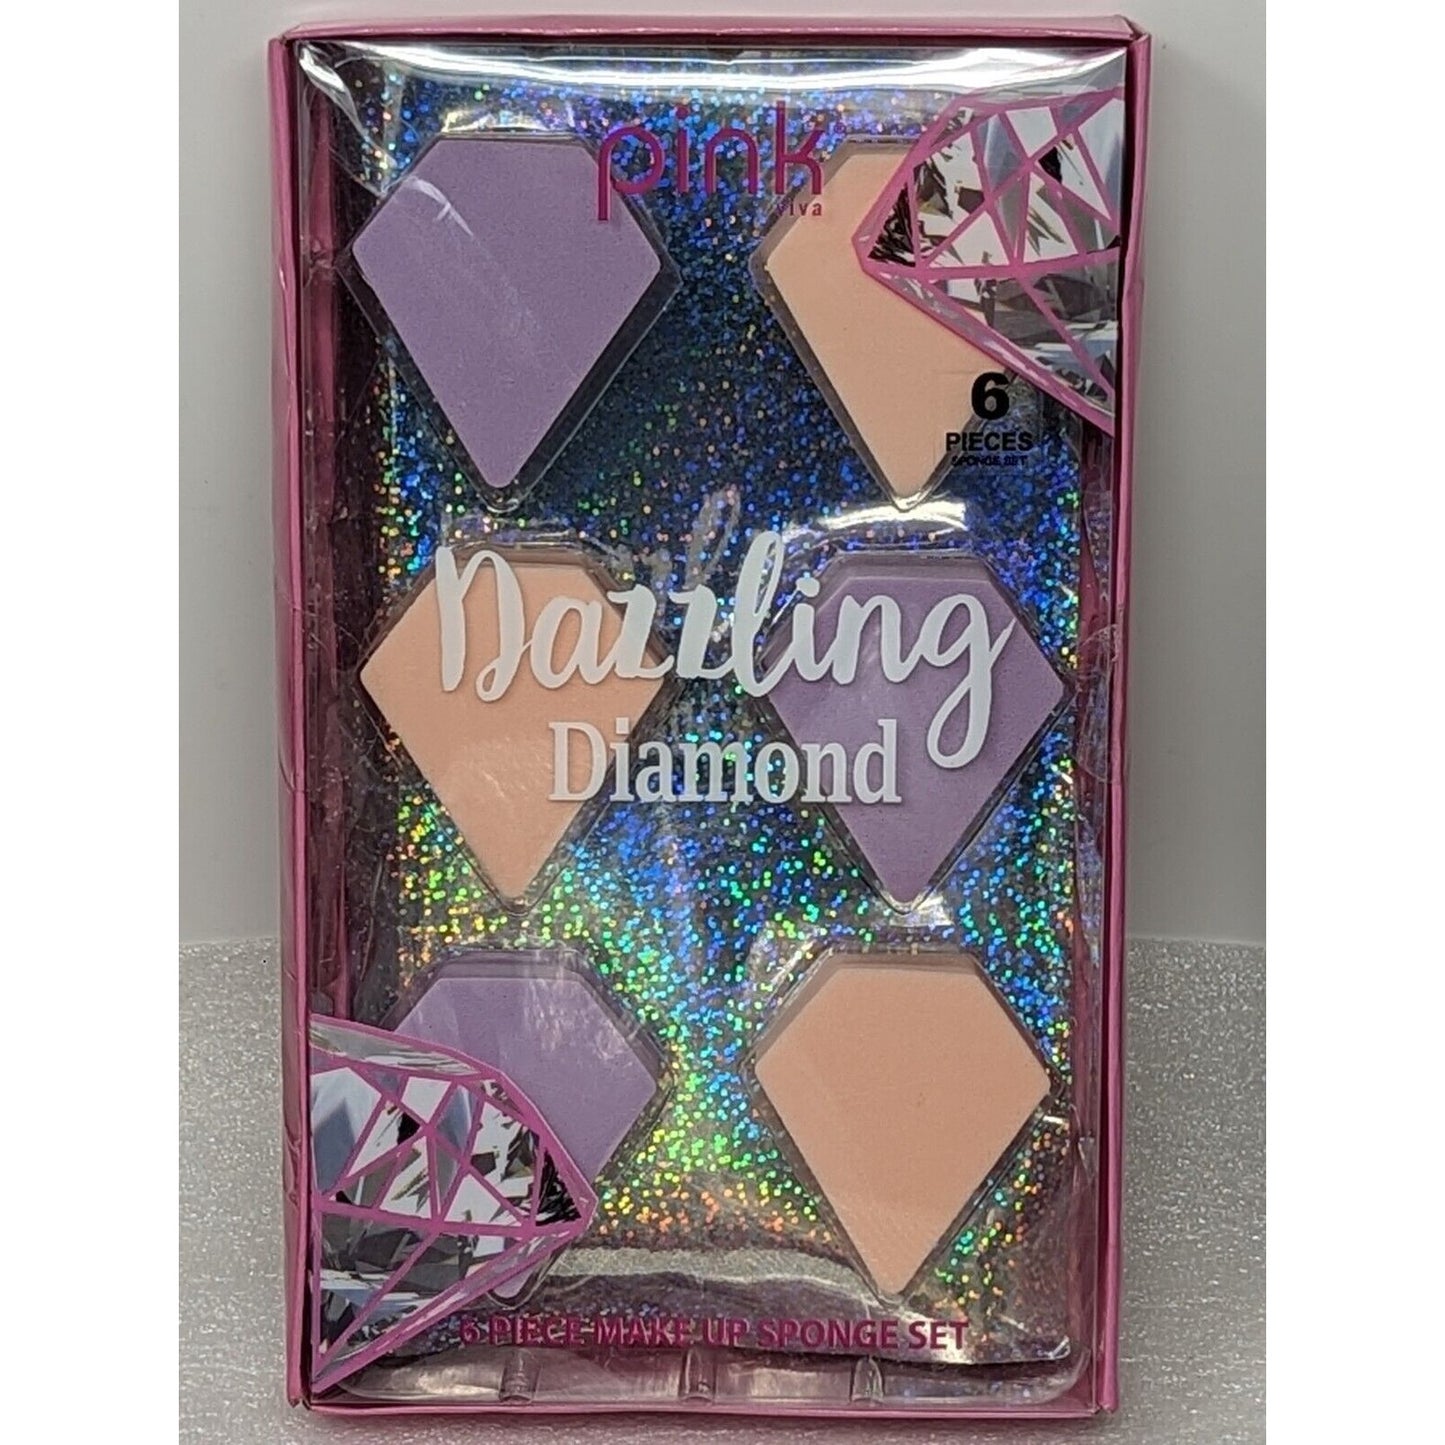 Pink Viva Dazzling Diamond Makeup Cosmetic Sponge Applicator Set